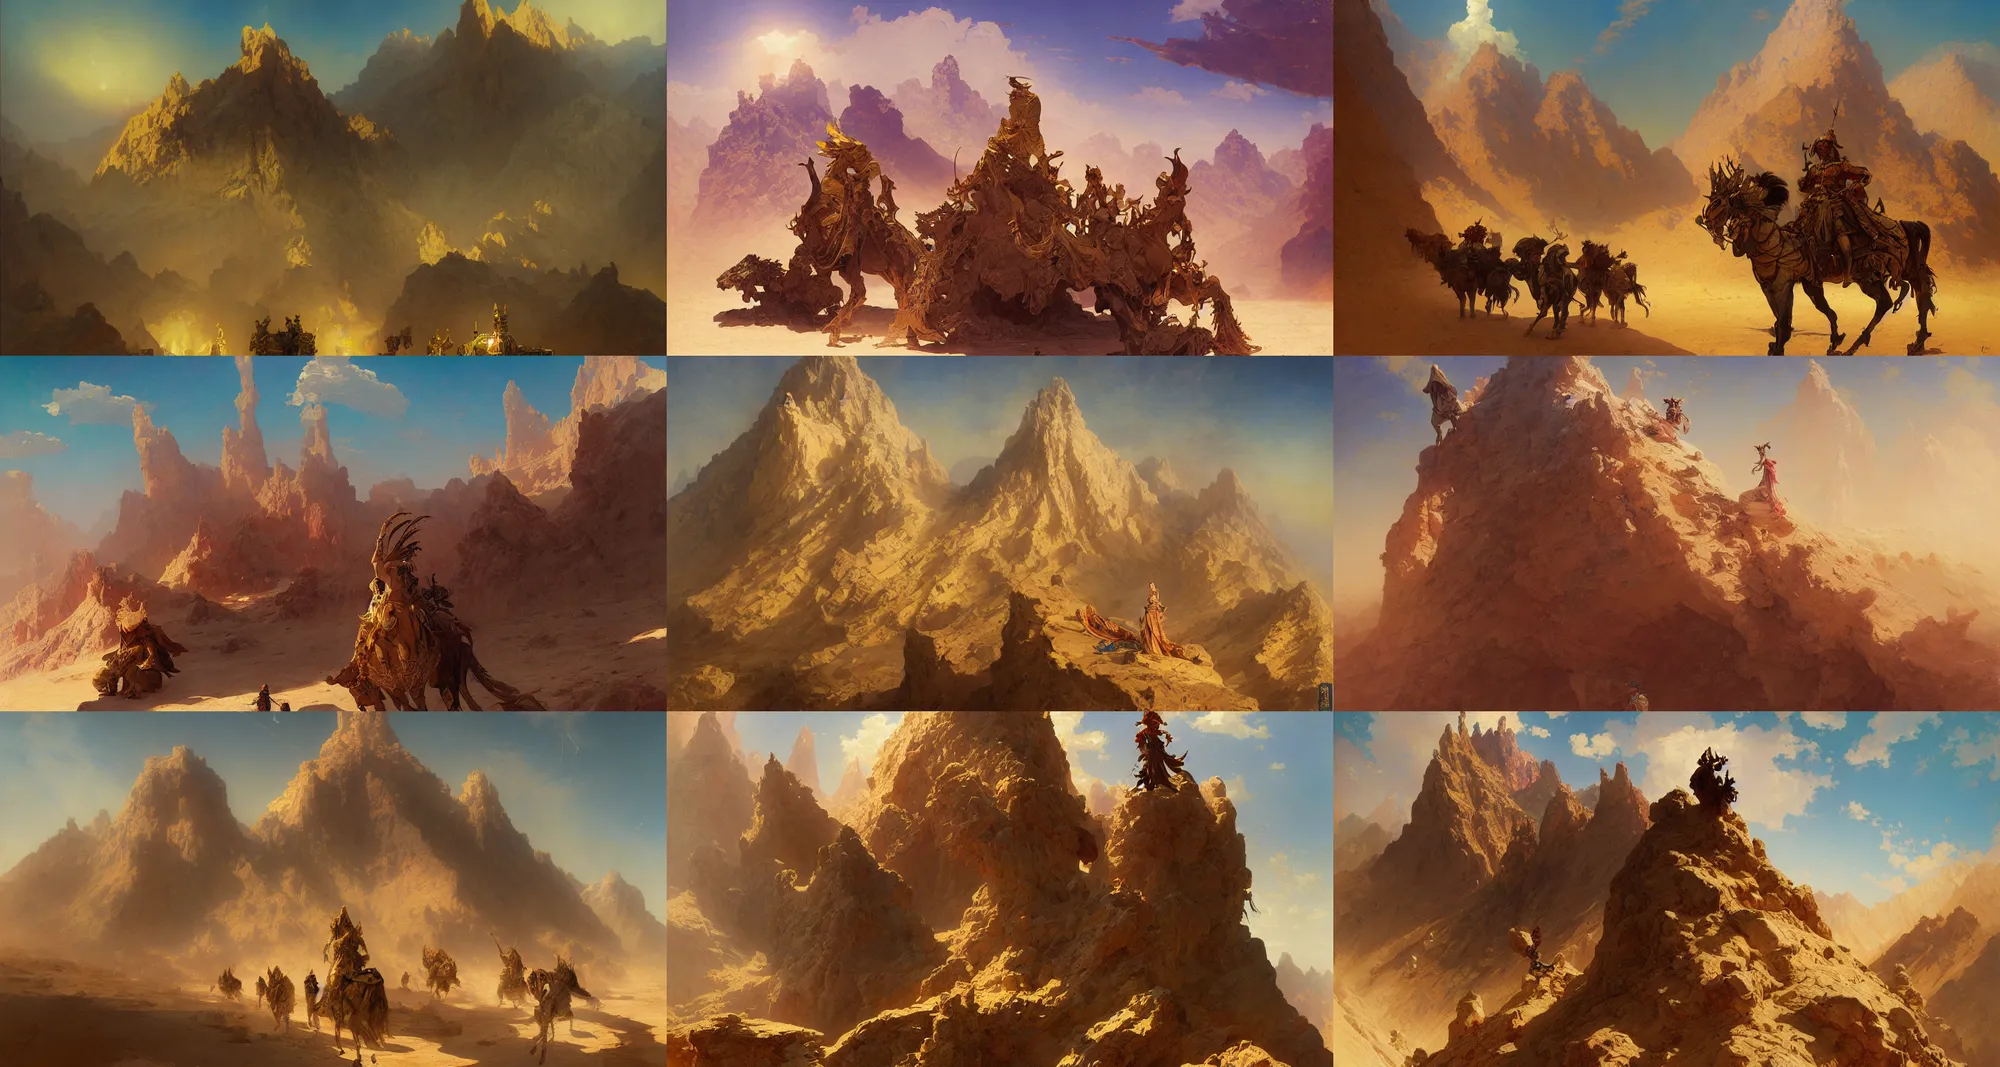 Prompt: golden mountain in the desert, art by joseph leyendecker, peter mohrbacher, ivan aivazovsky, ruan jia, reza afshar, marc simonetti, alphonse mucha